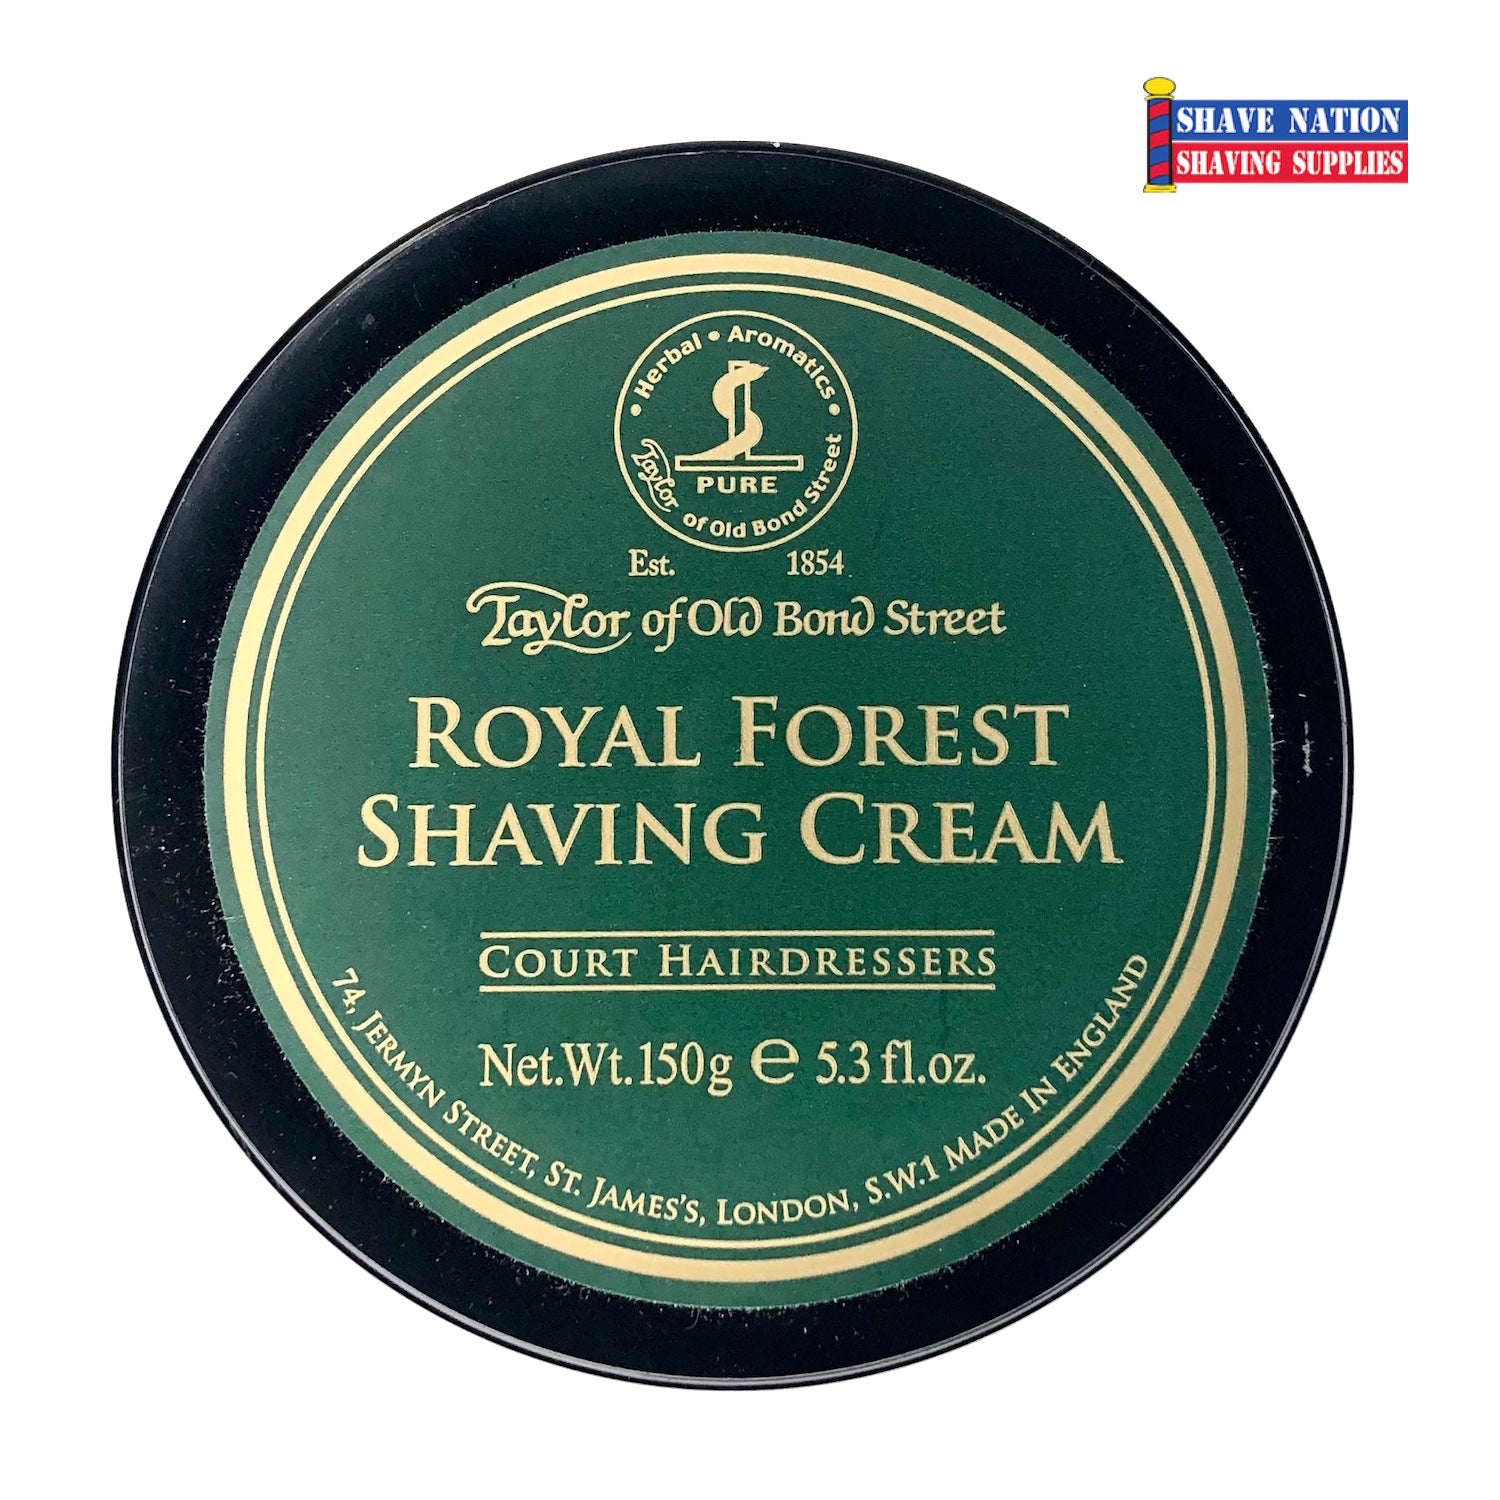 Shaving Taylor Shave Royal Street Nation | Supplies® Forest Old Shaving Cream of Bond